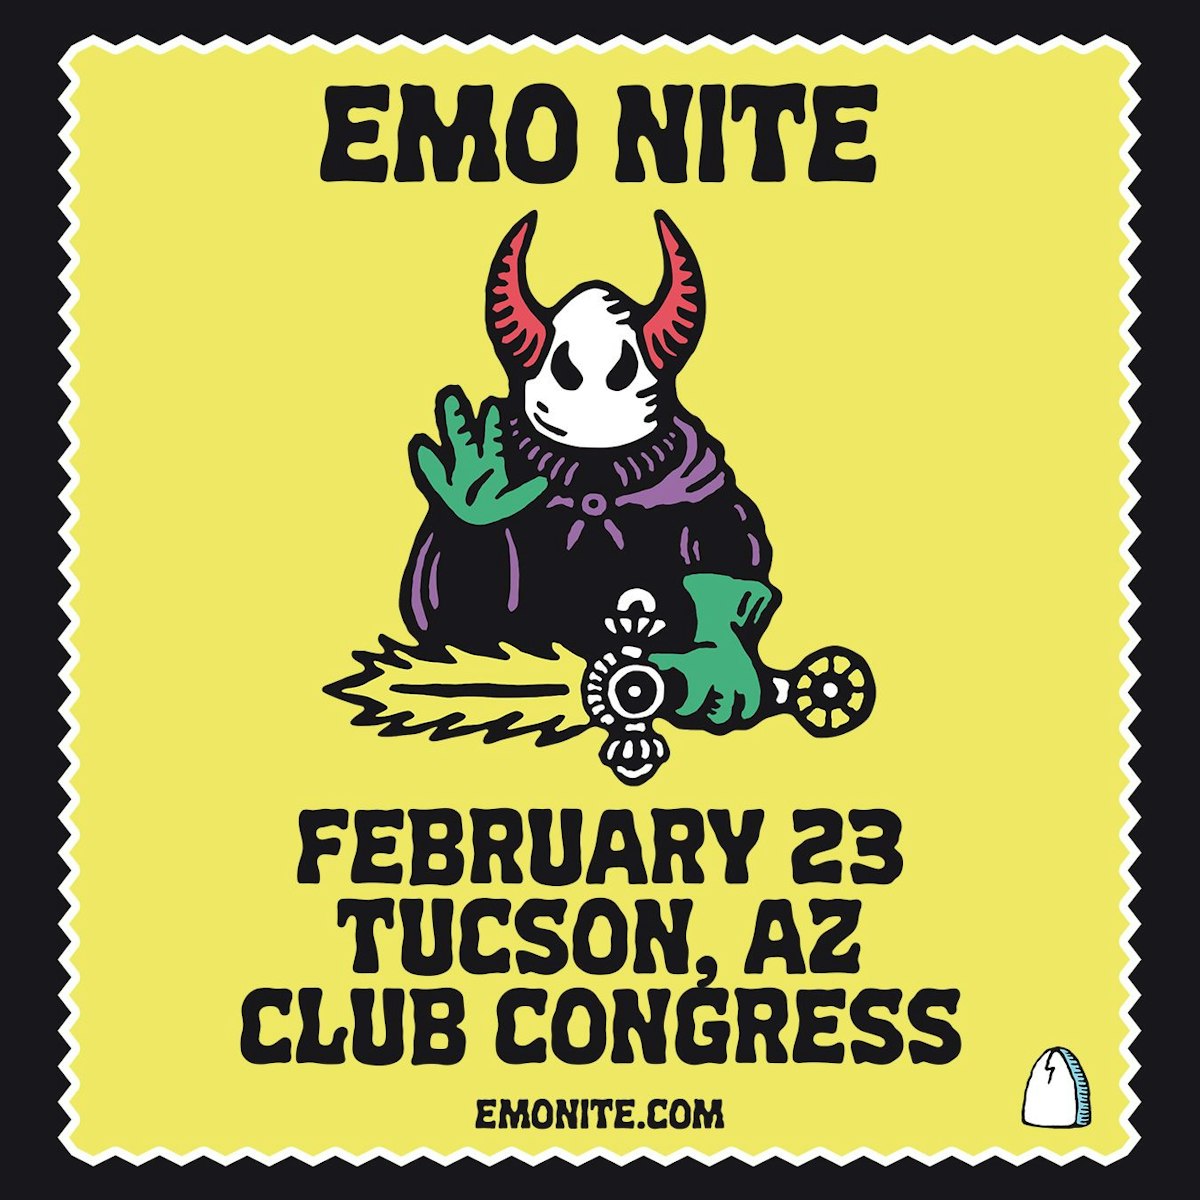 Emo Nite at Club Congress!